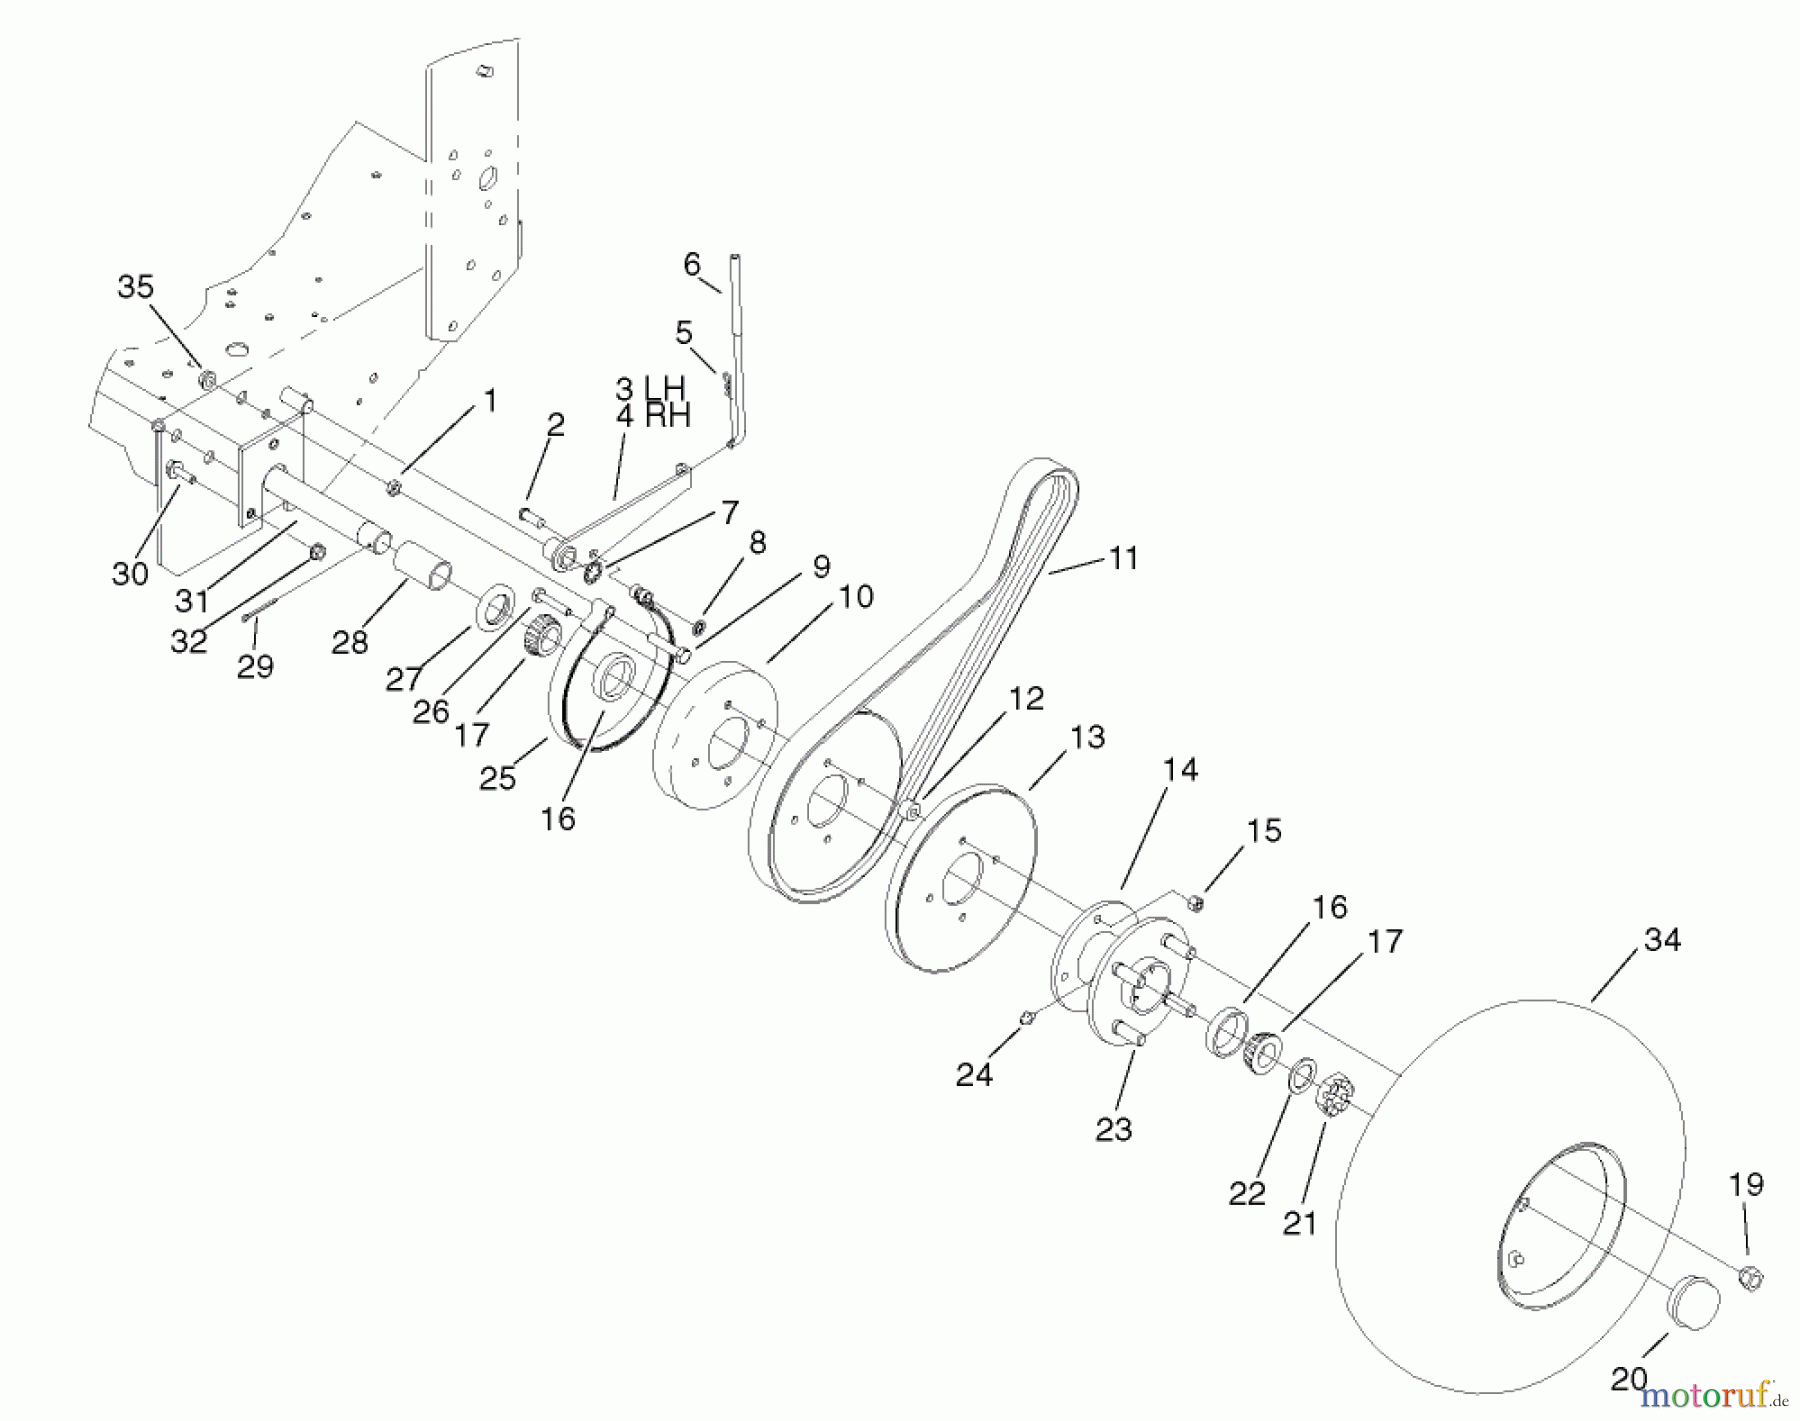  Rasenmäher für Großflächen 30259 - Toro Mid-Size ProLine Mower, Gear Drive, 17 hp, 44